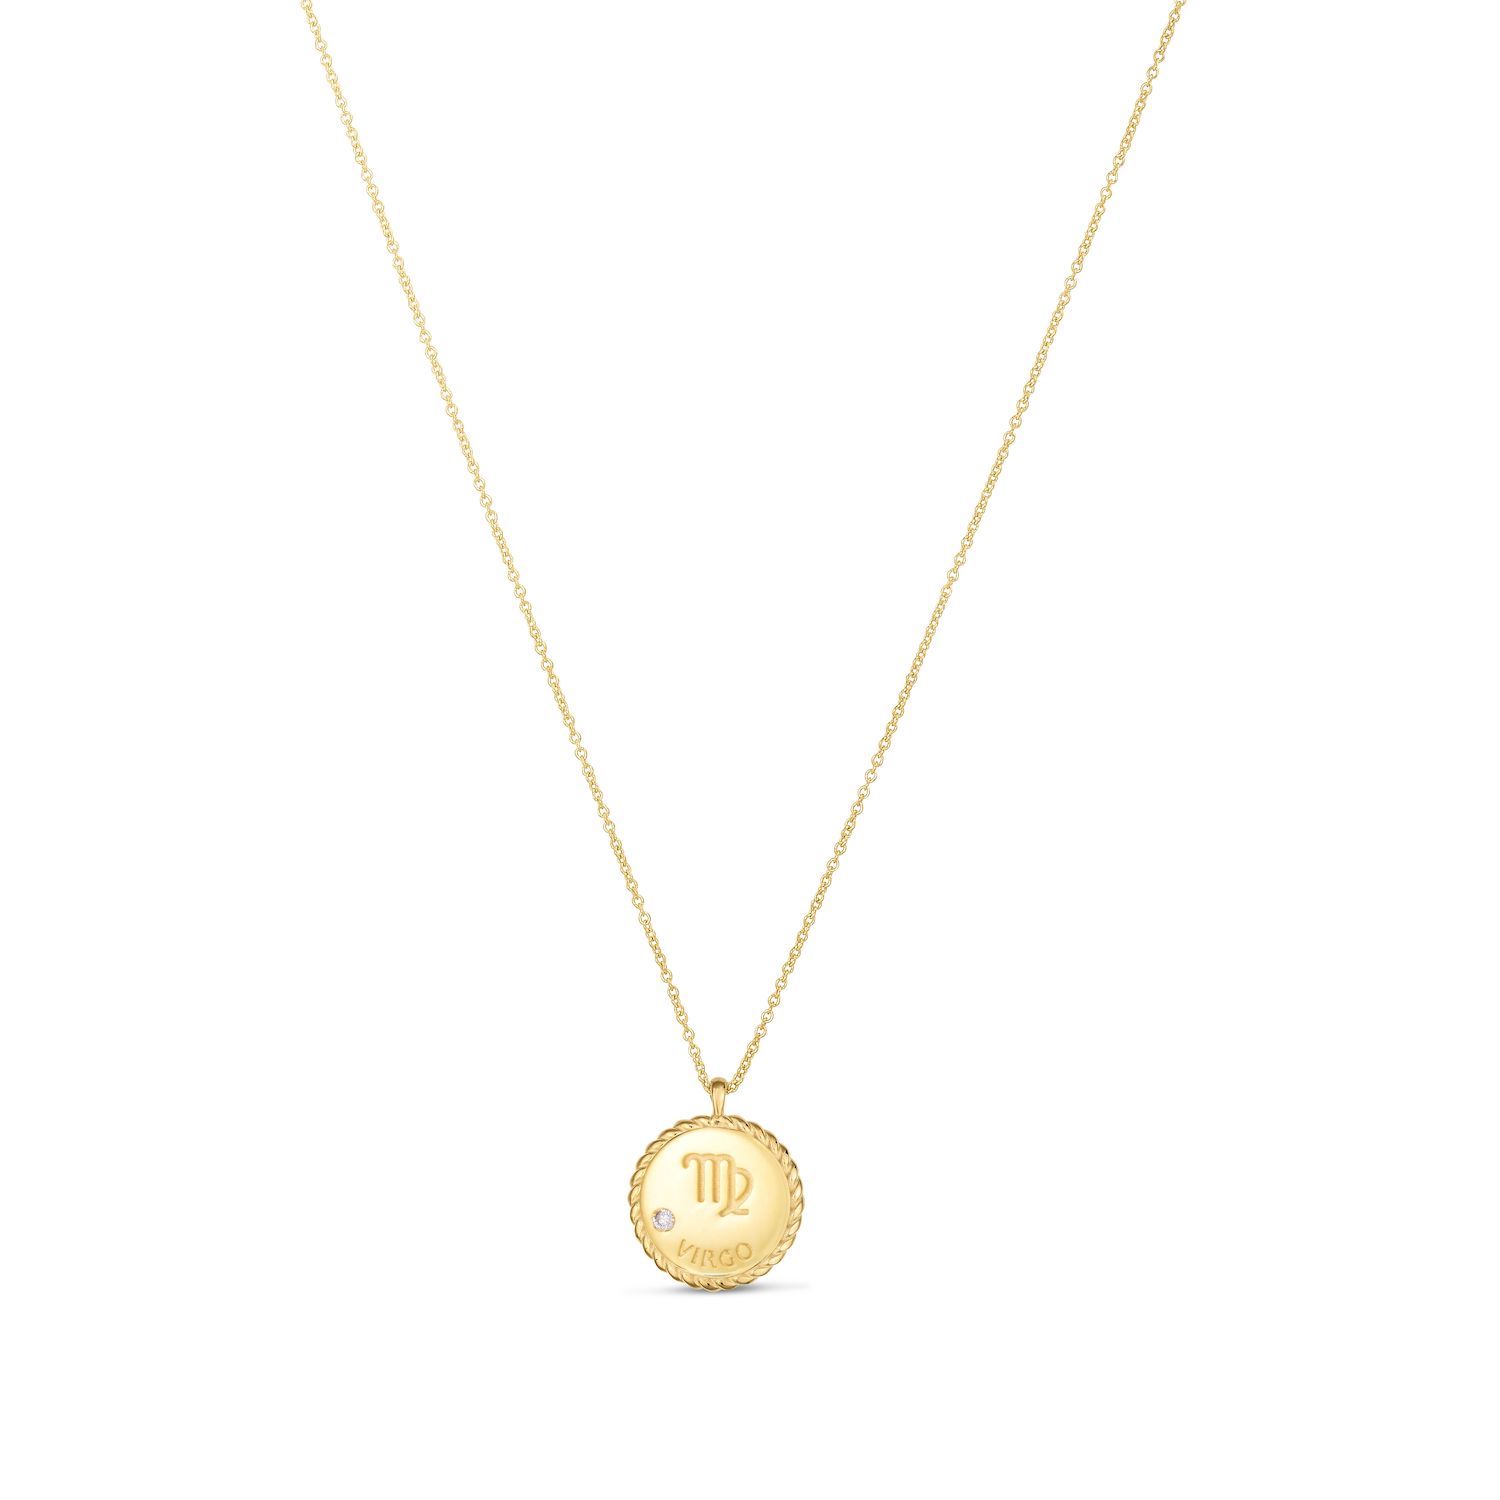 .01Ct Natural Diamond 14K Gold Zodiac Sign Medallion Pendant Necklace 16"-18" - Virgo